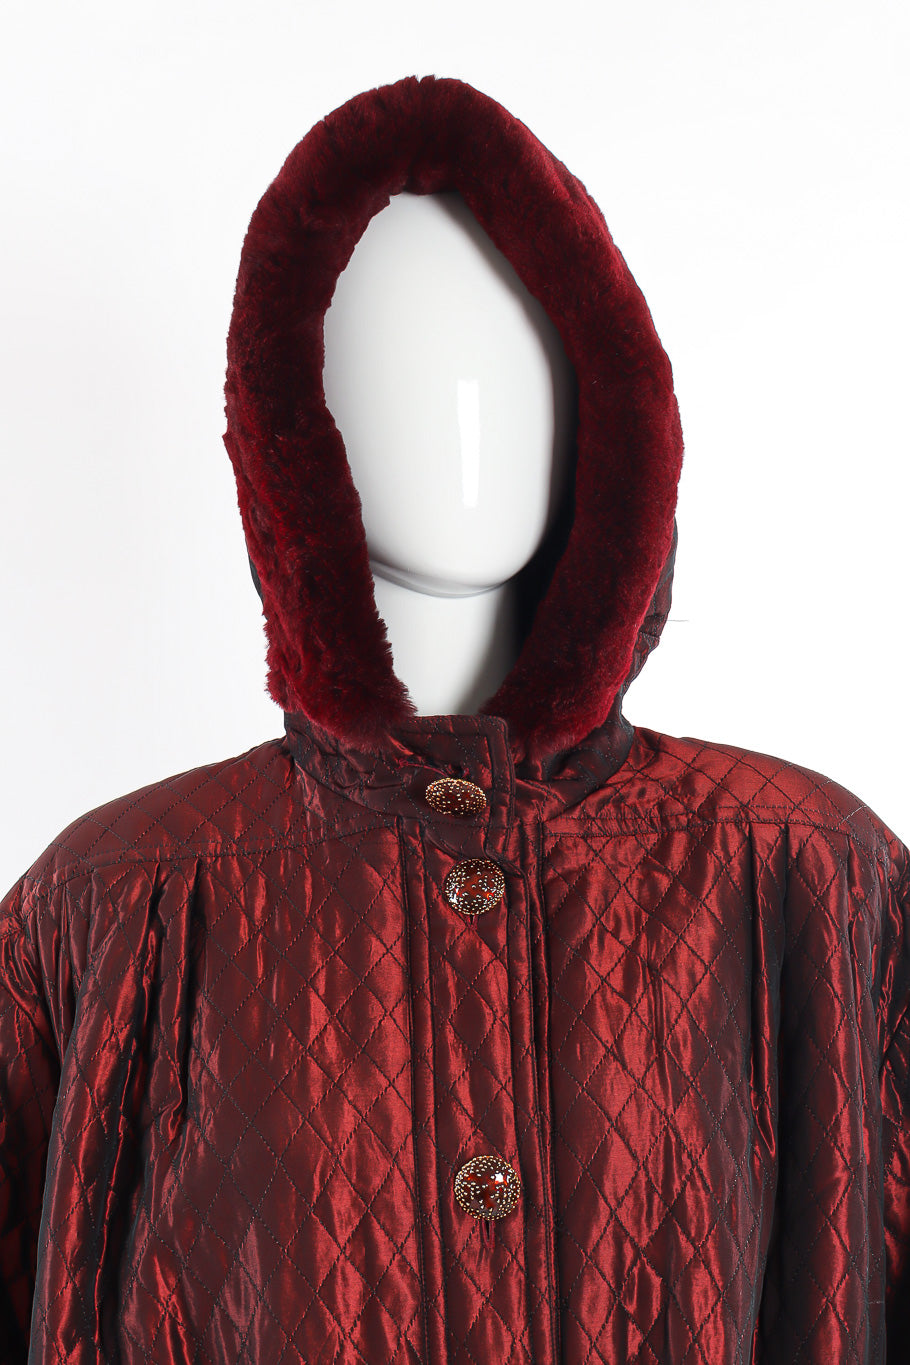 Quilted fur trim coat by Yves Saint Laurent close up hood on mannequin @recessla